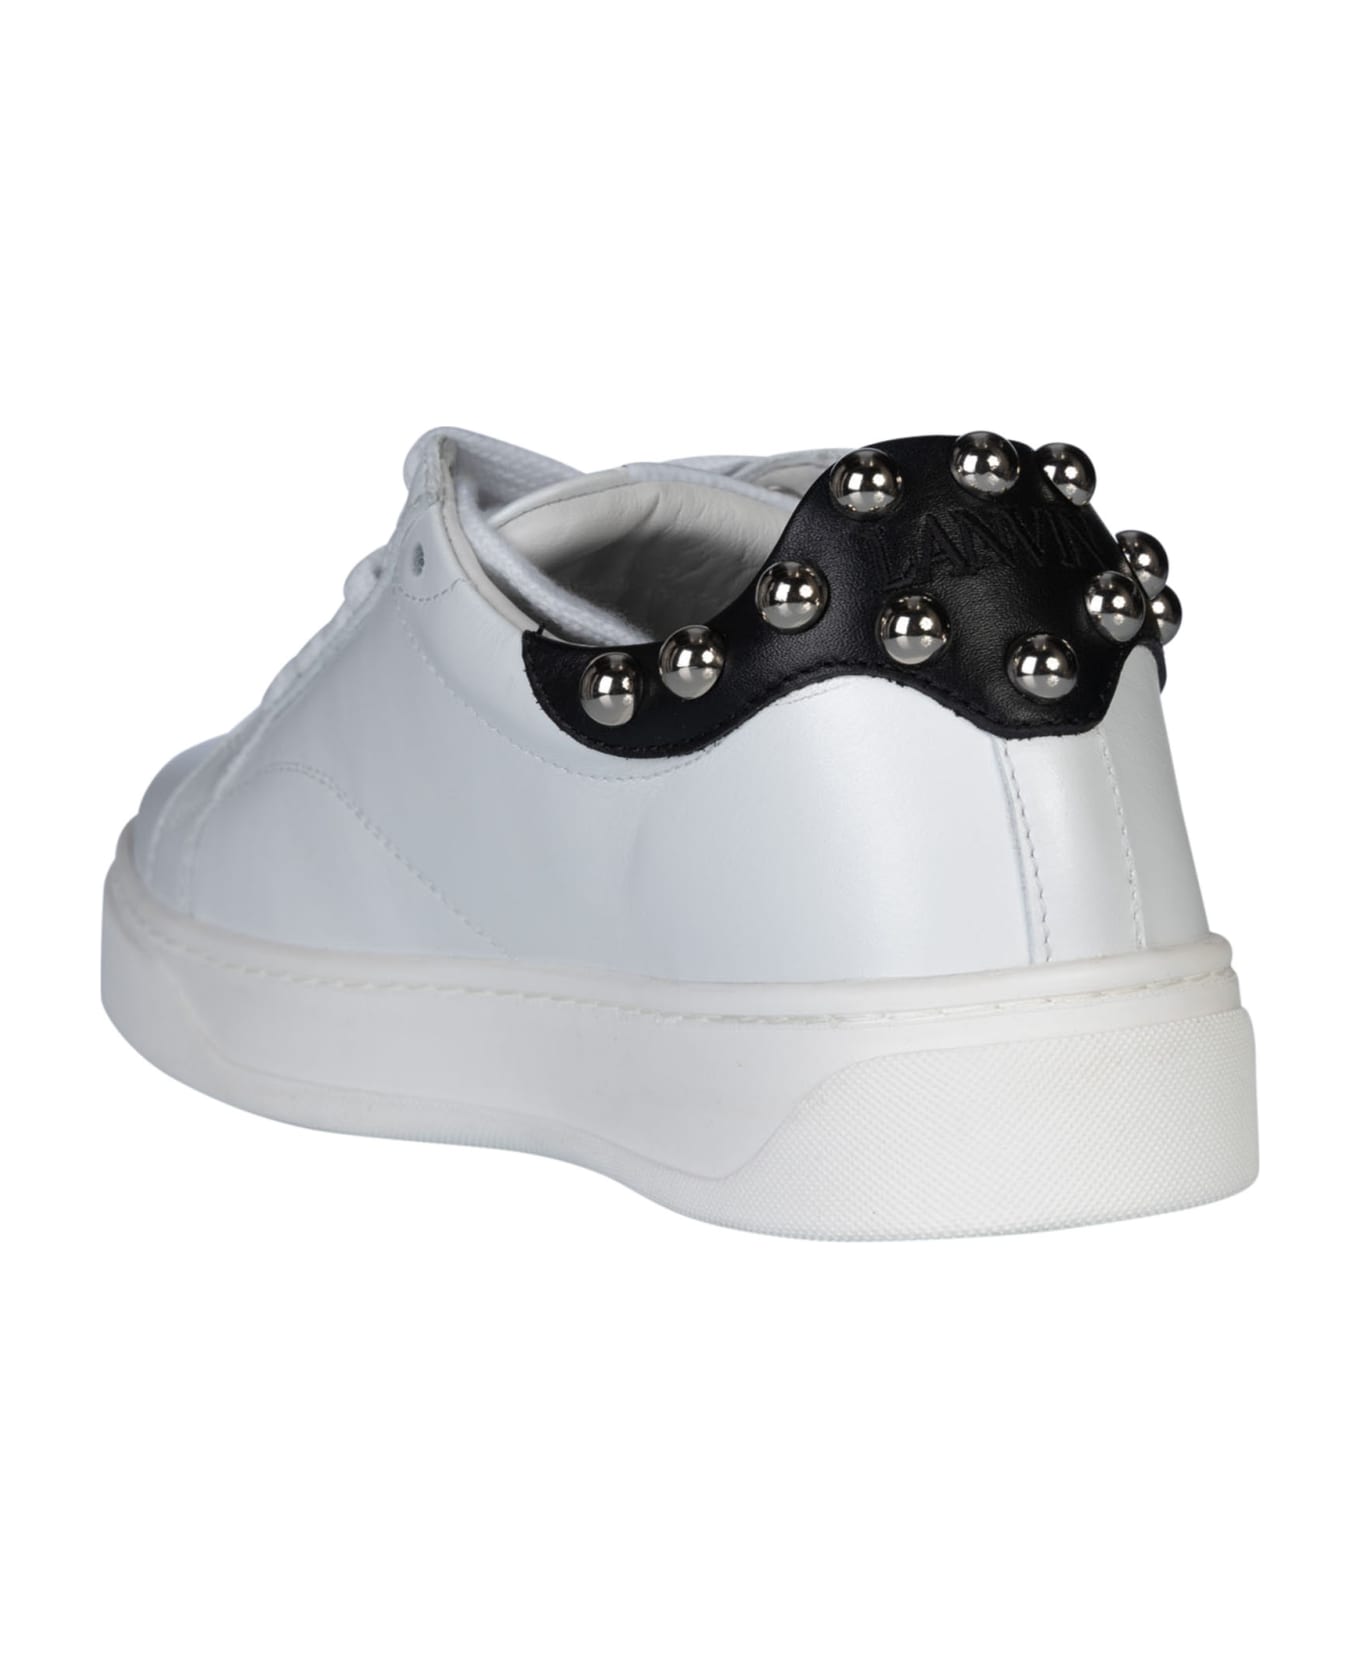 Lanvin Back Studded Sneakers - White/Silver スニーカー